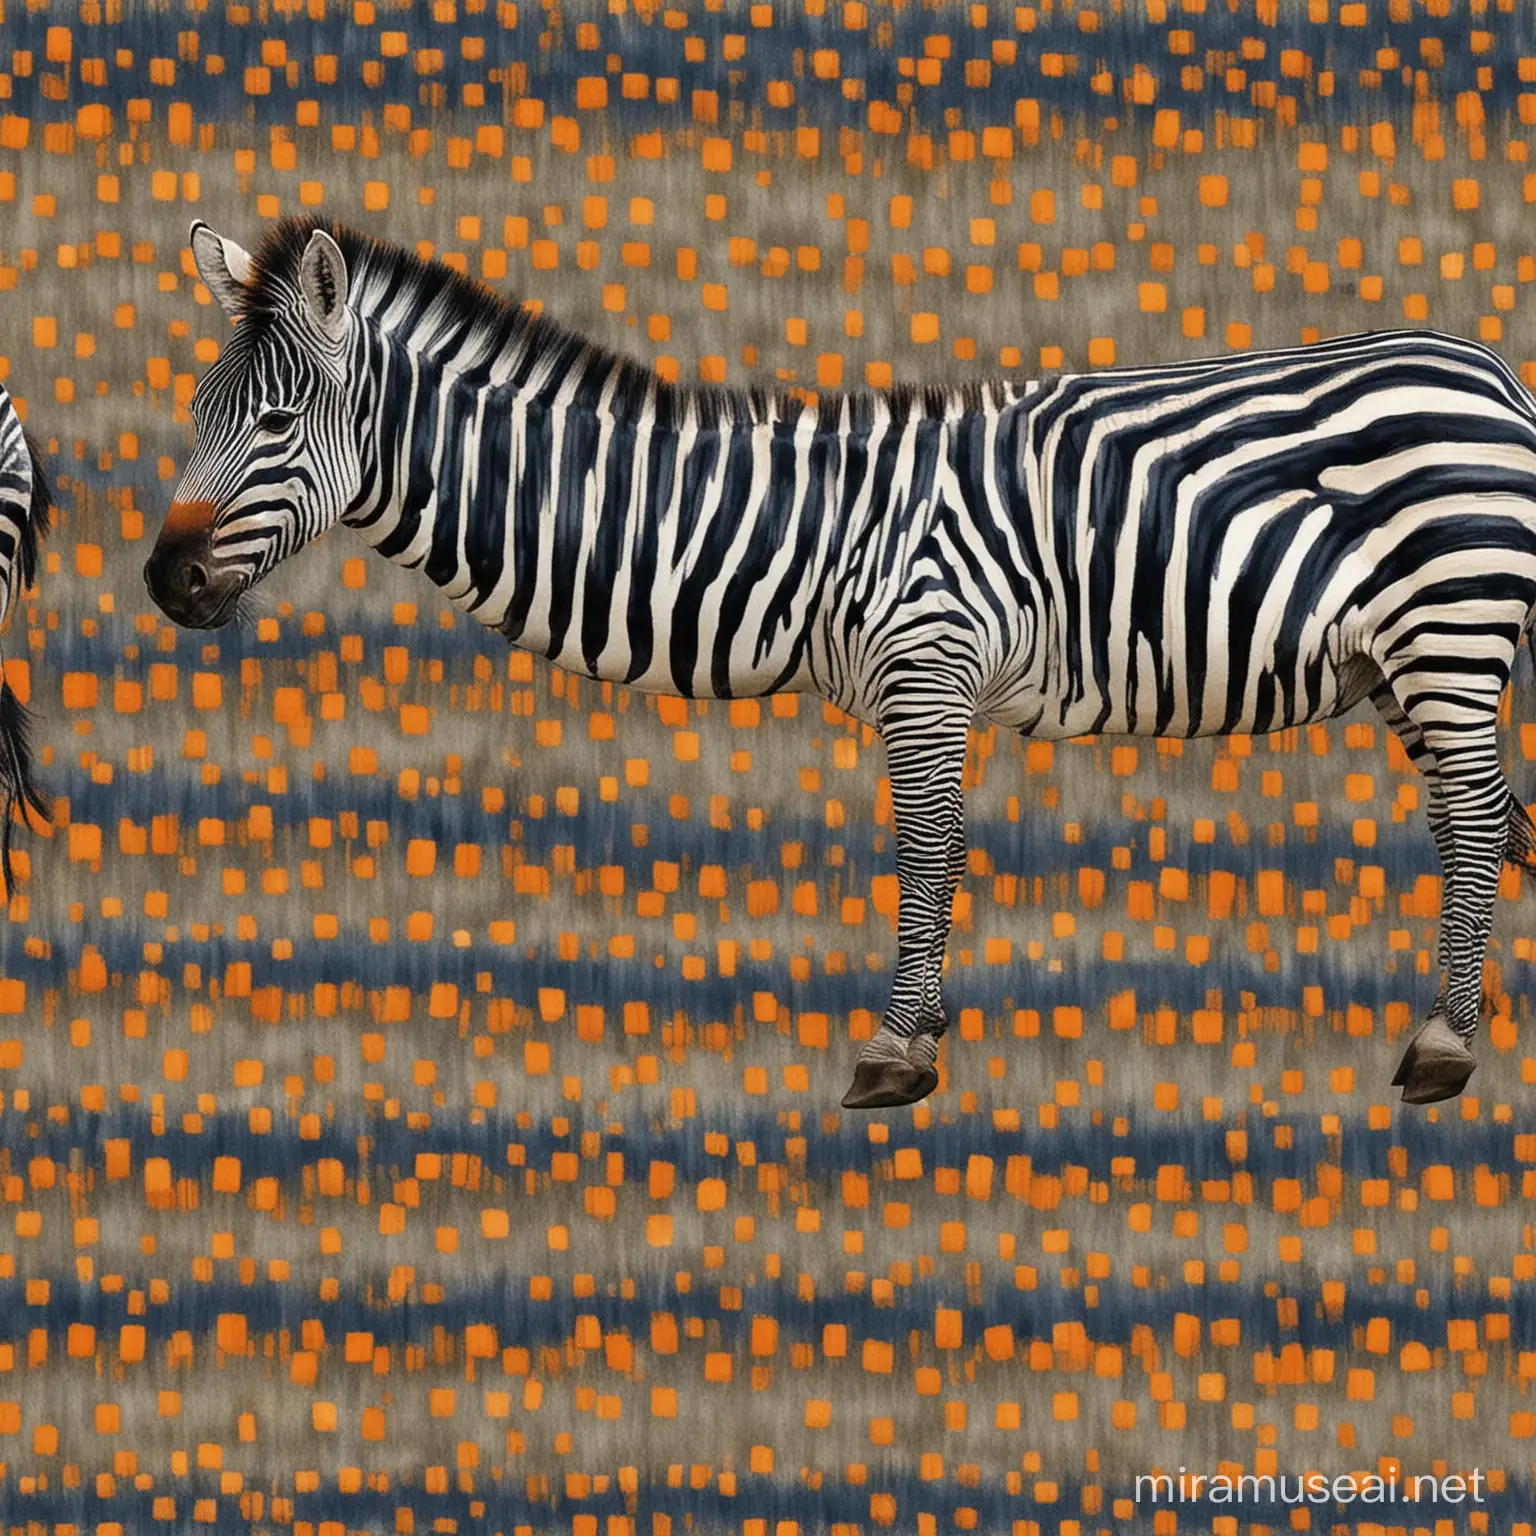 Exotic Zebra with Vibrant Dark Blue and Orange Stripes